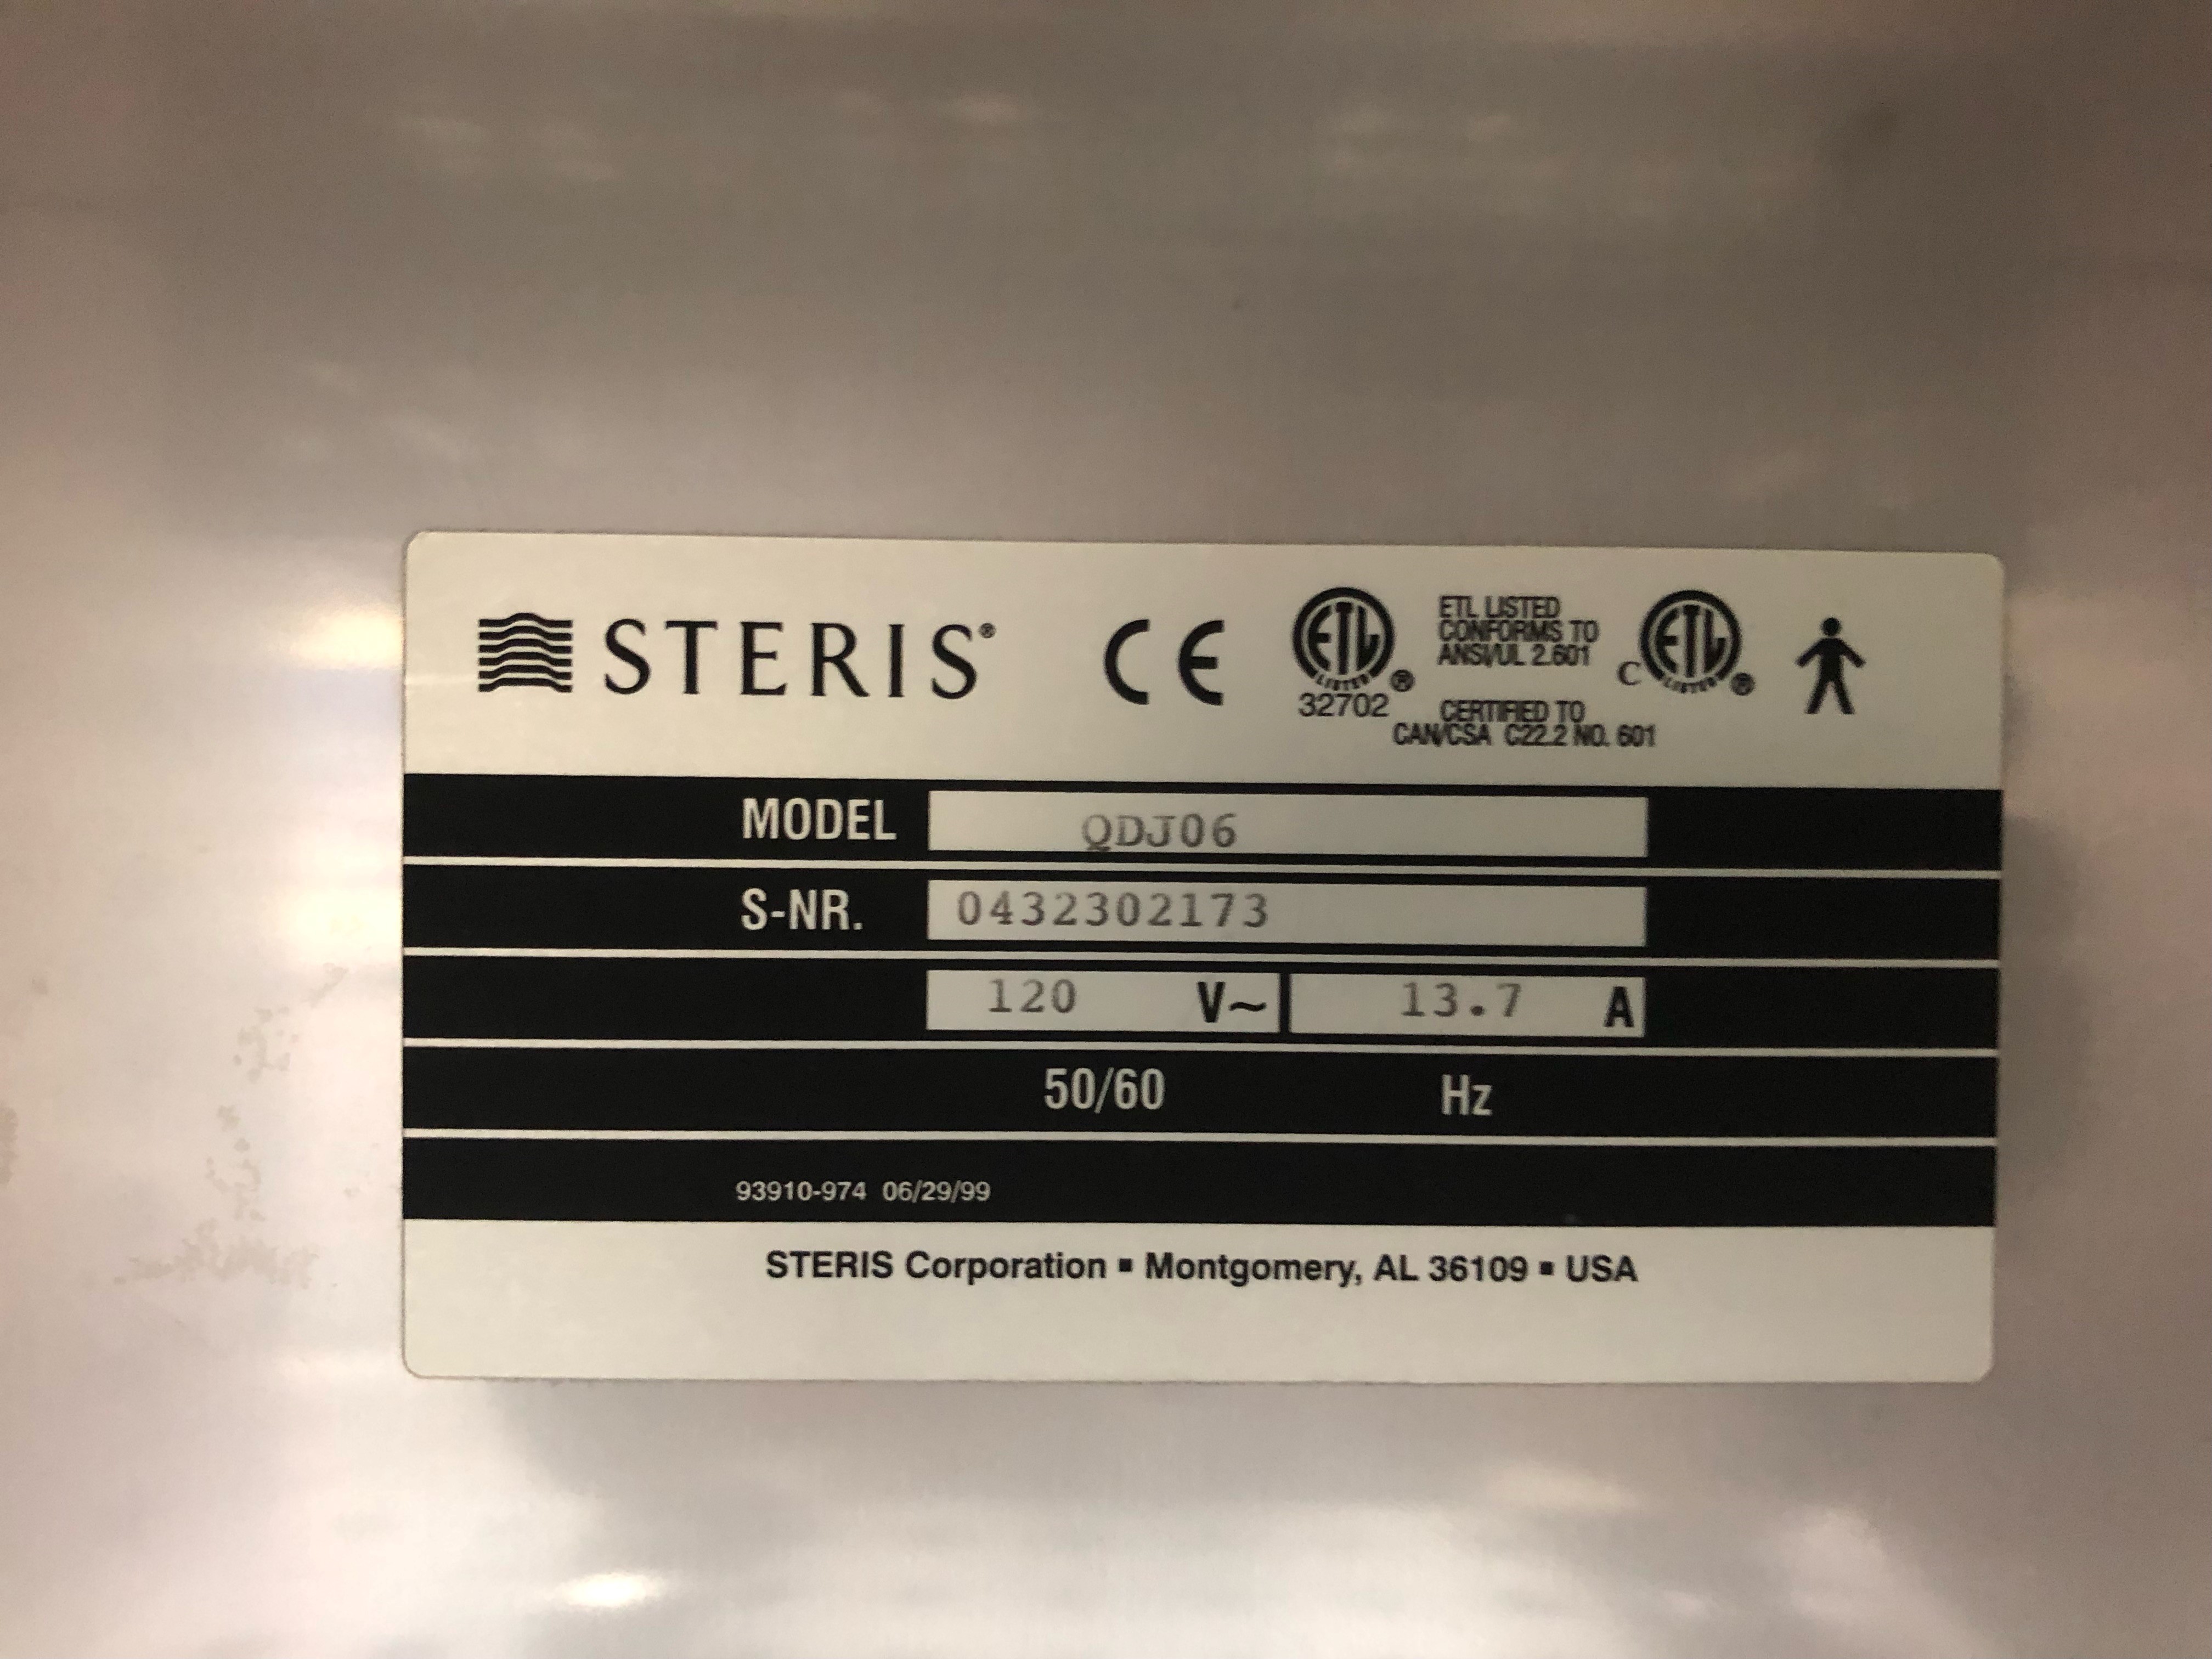 Steris/Amsco QDJ06 Warming Cabinet